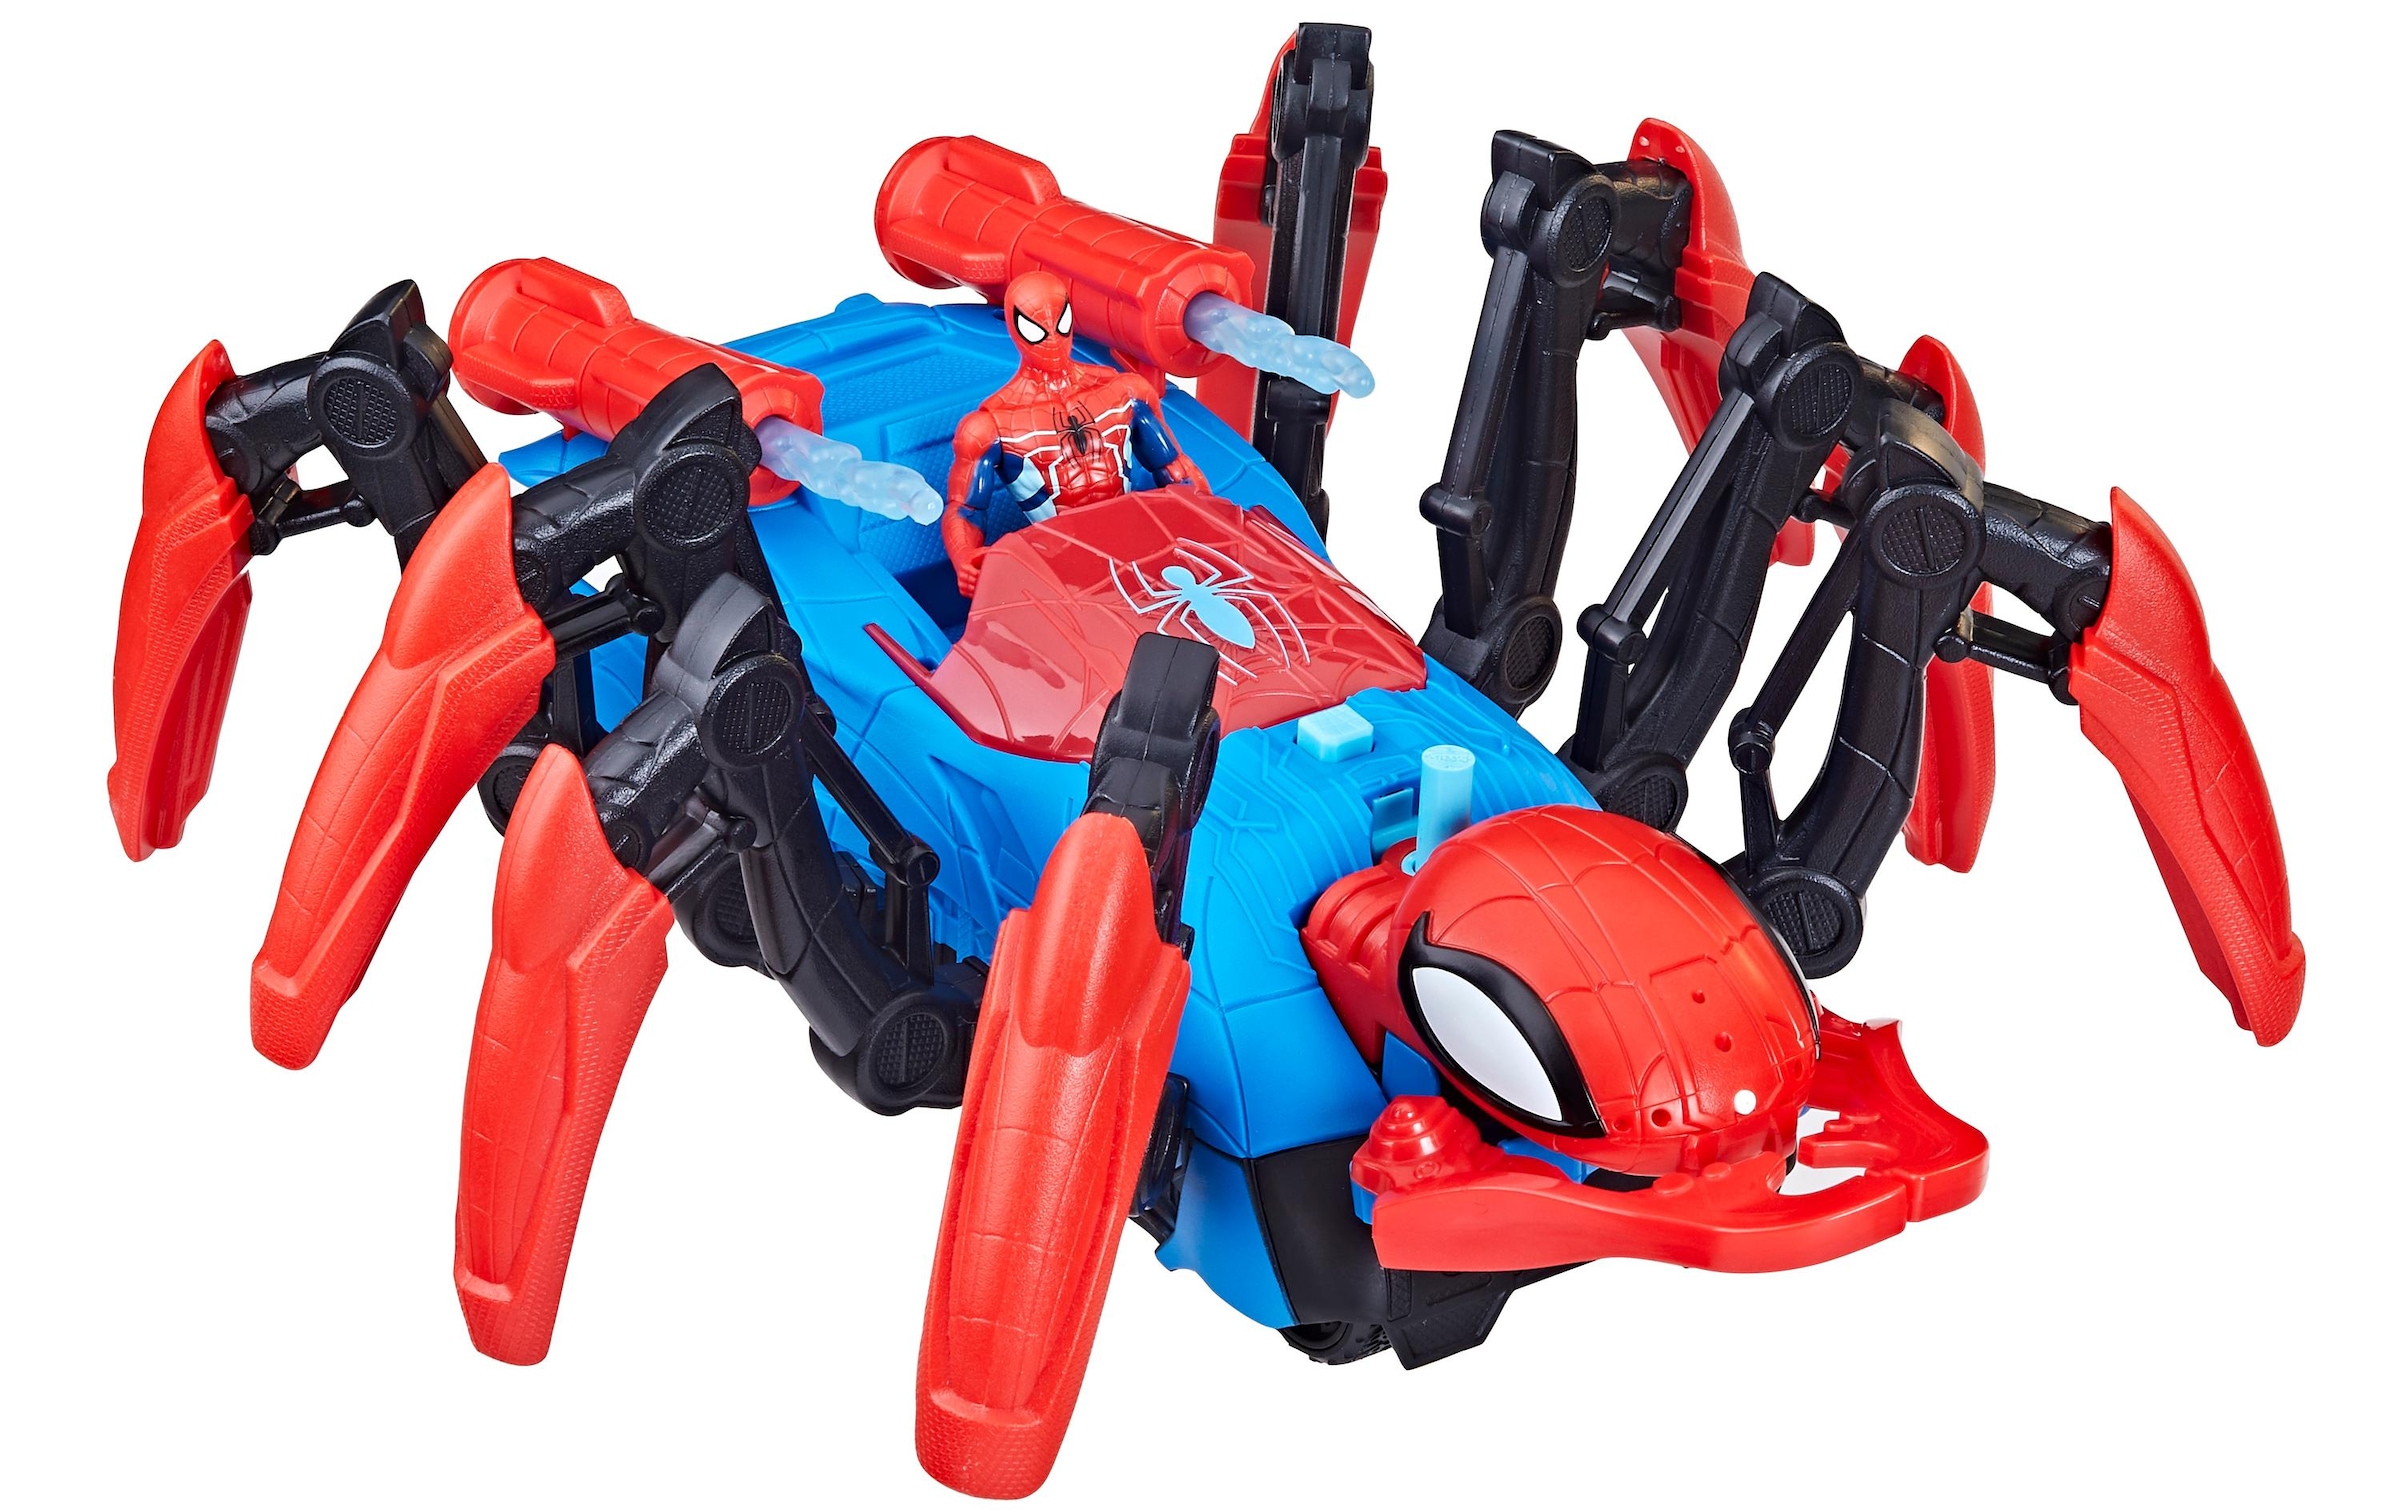 Hasbro Spielfigur »Marvel Spider-Man Krabbelspi«